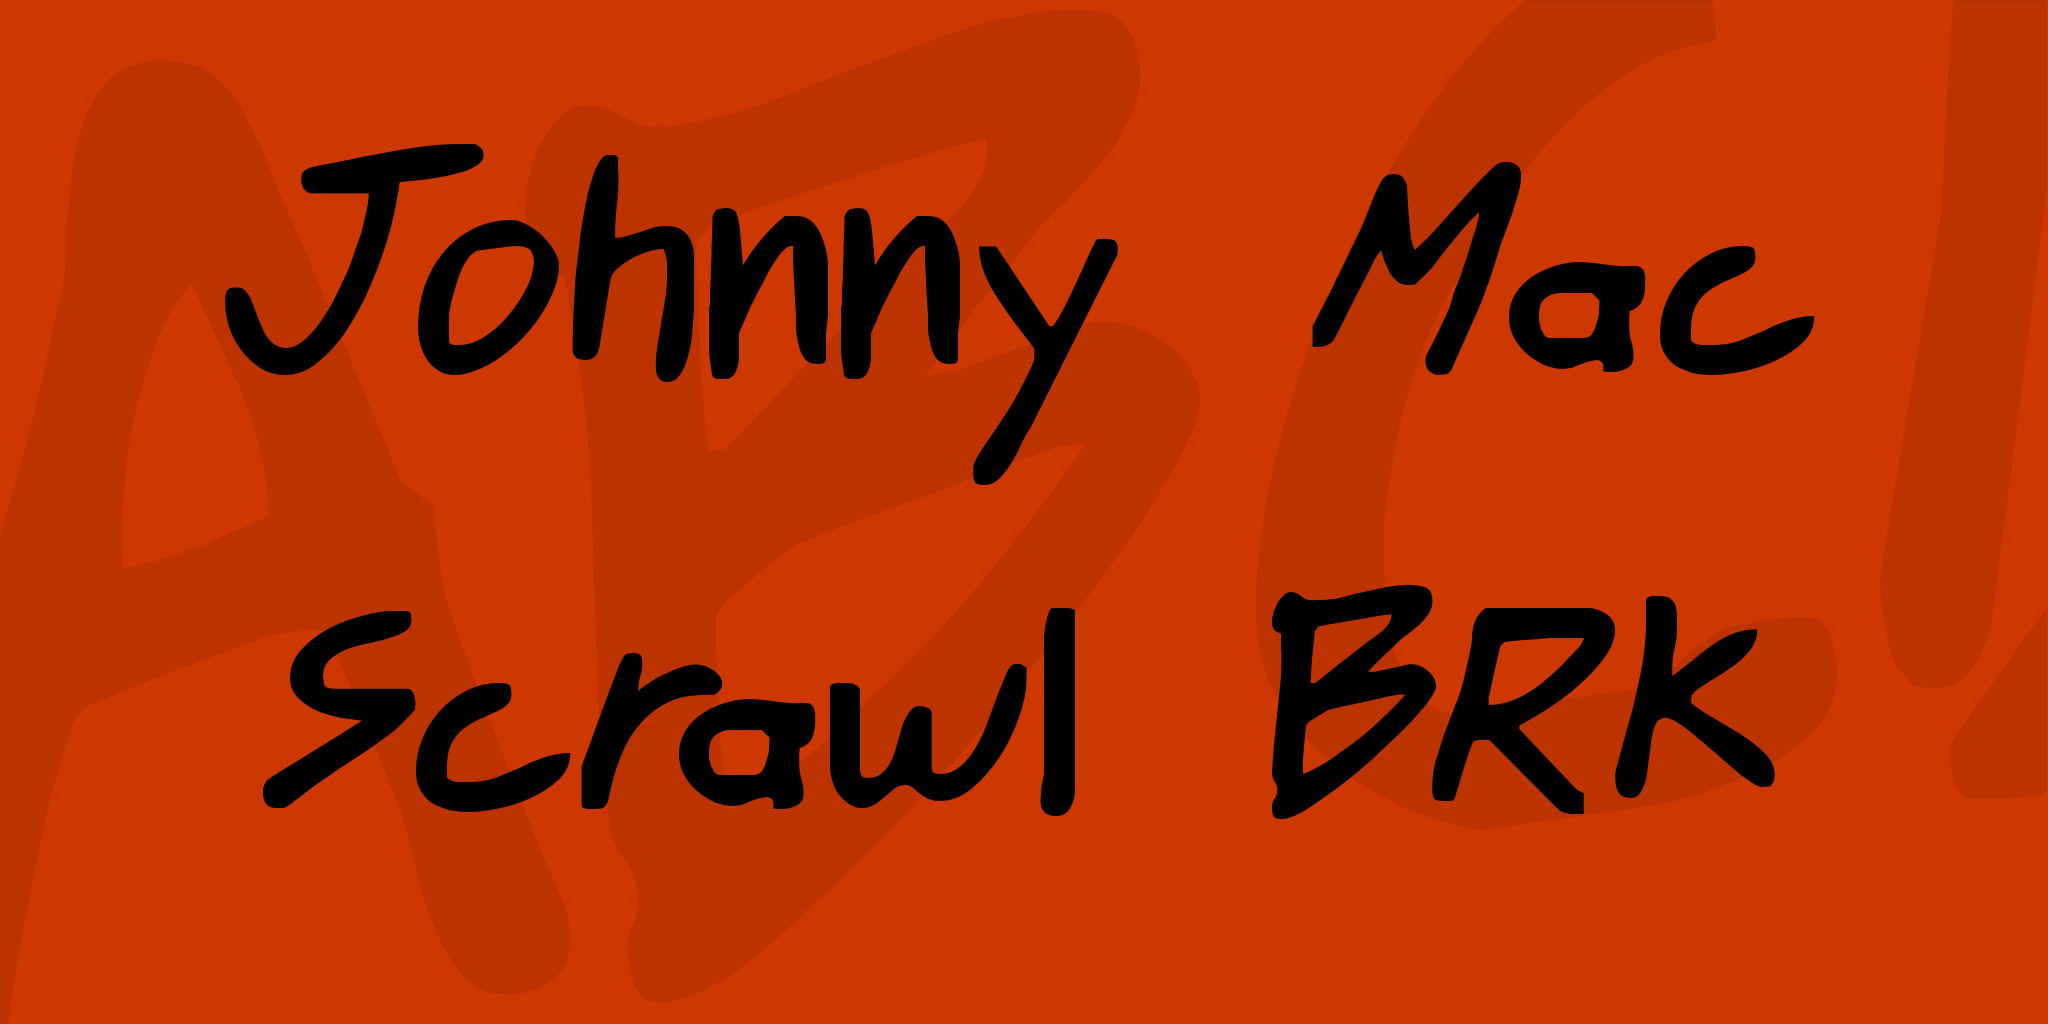 Johnny Mac Scrawl Brk